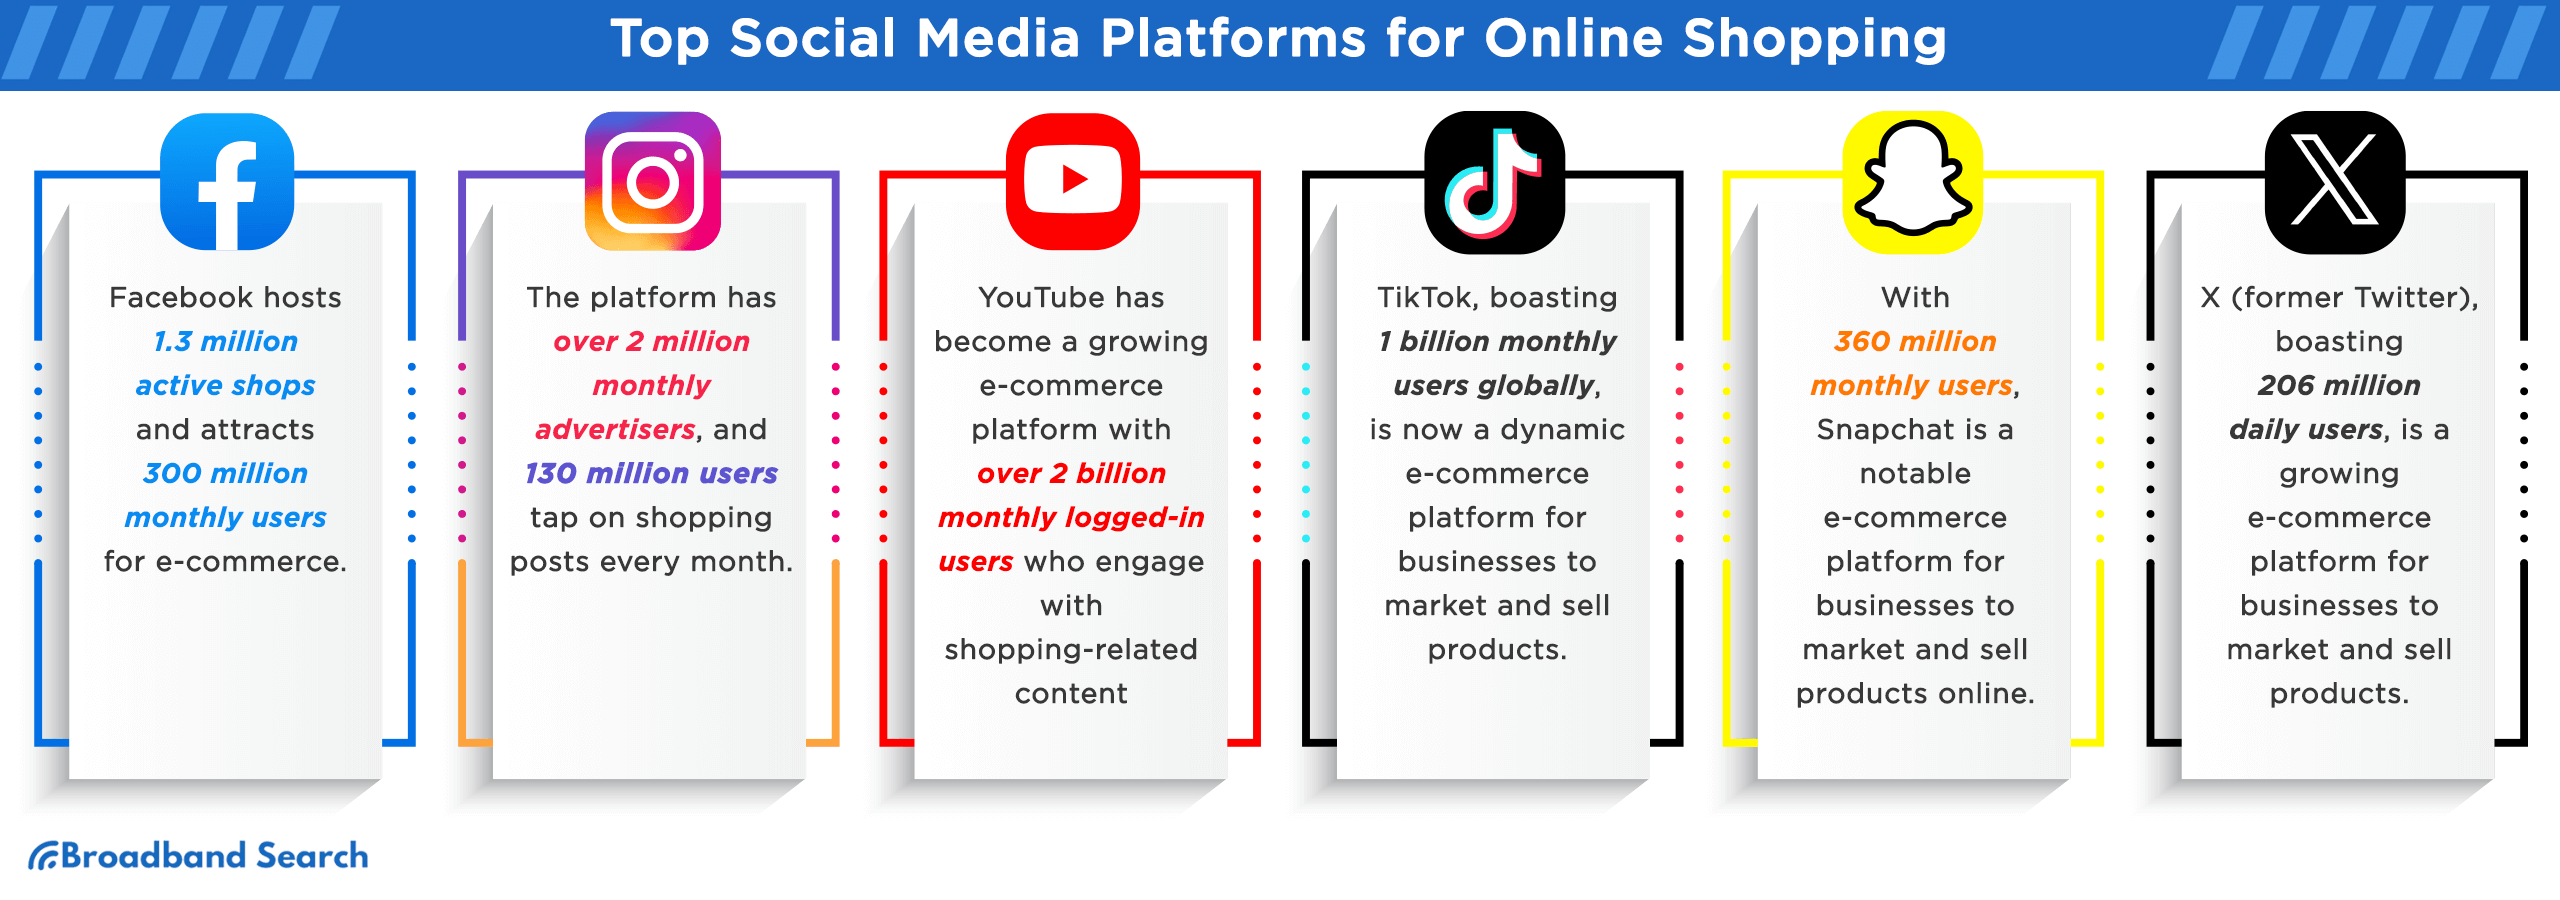 Top Social Media Platforms for Online Shopping